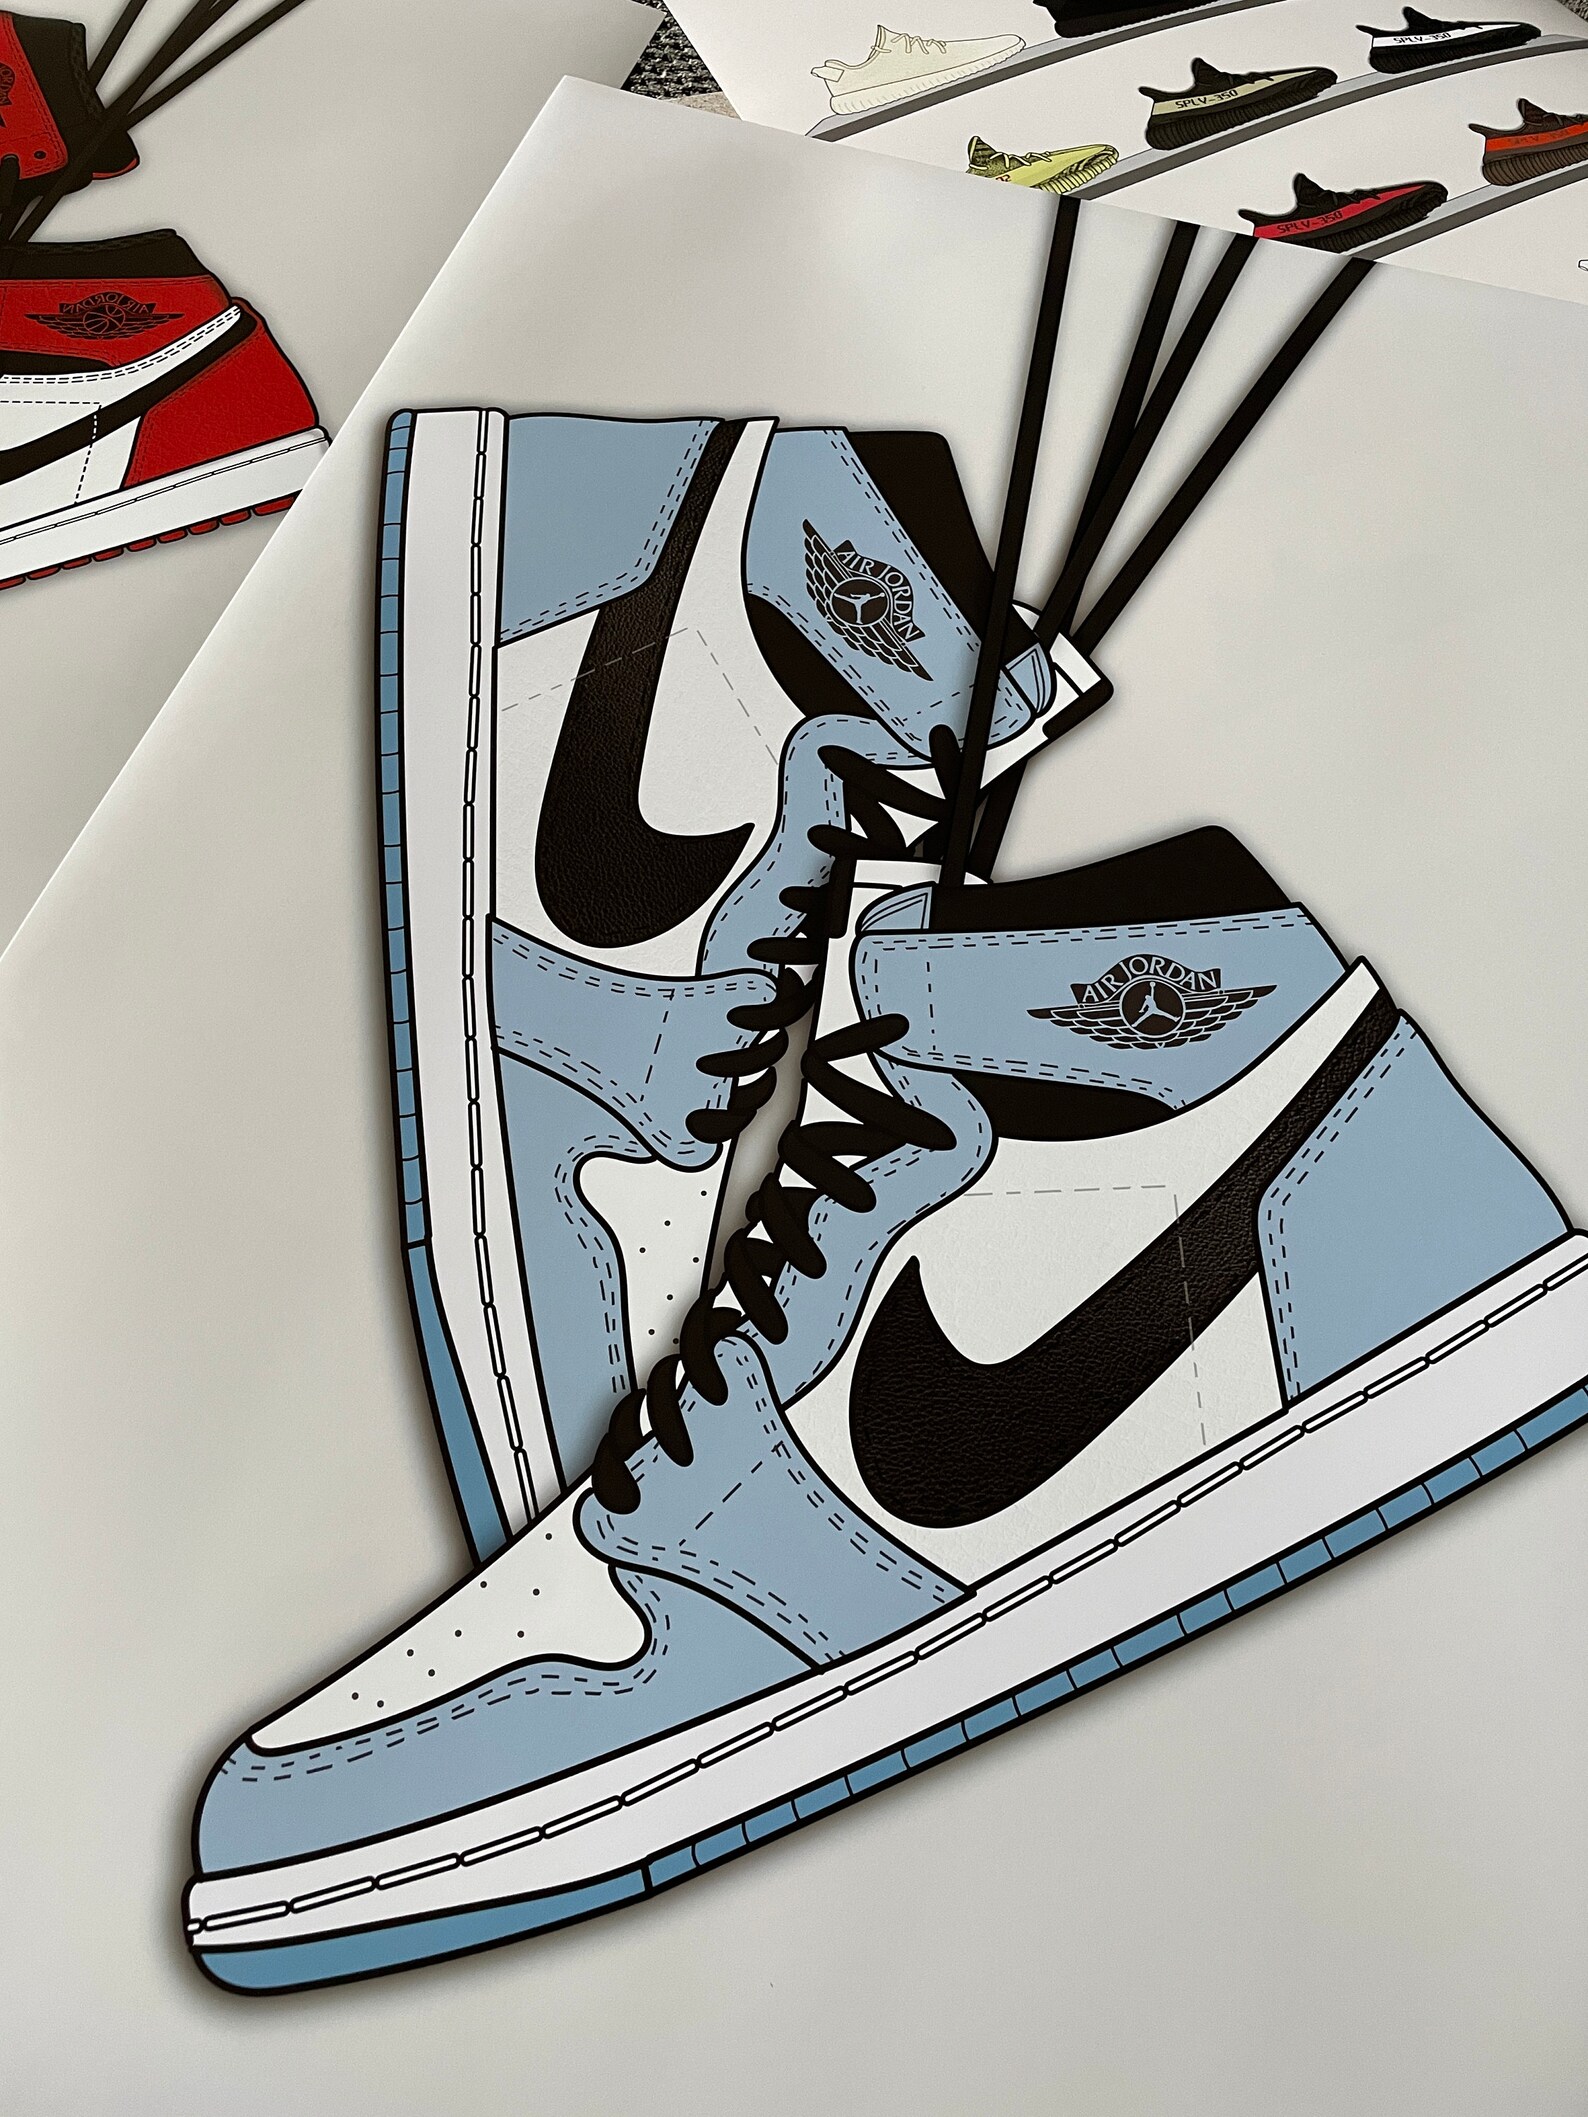 Sneaker trainer Air Jordan 1 university blue poster art print | Etsy